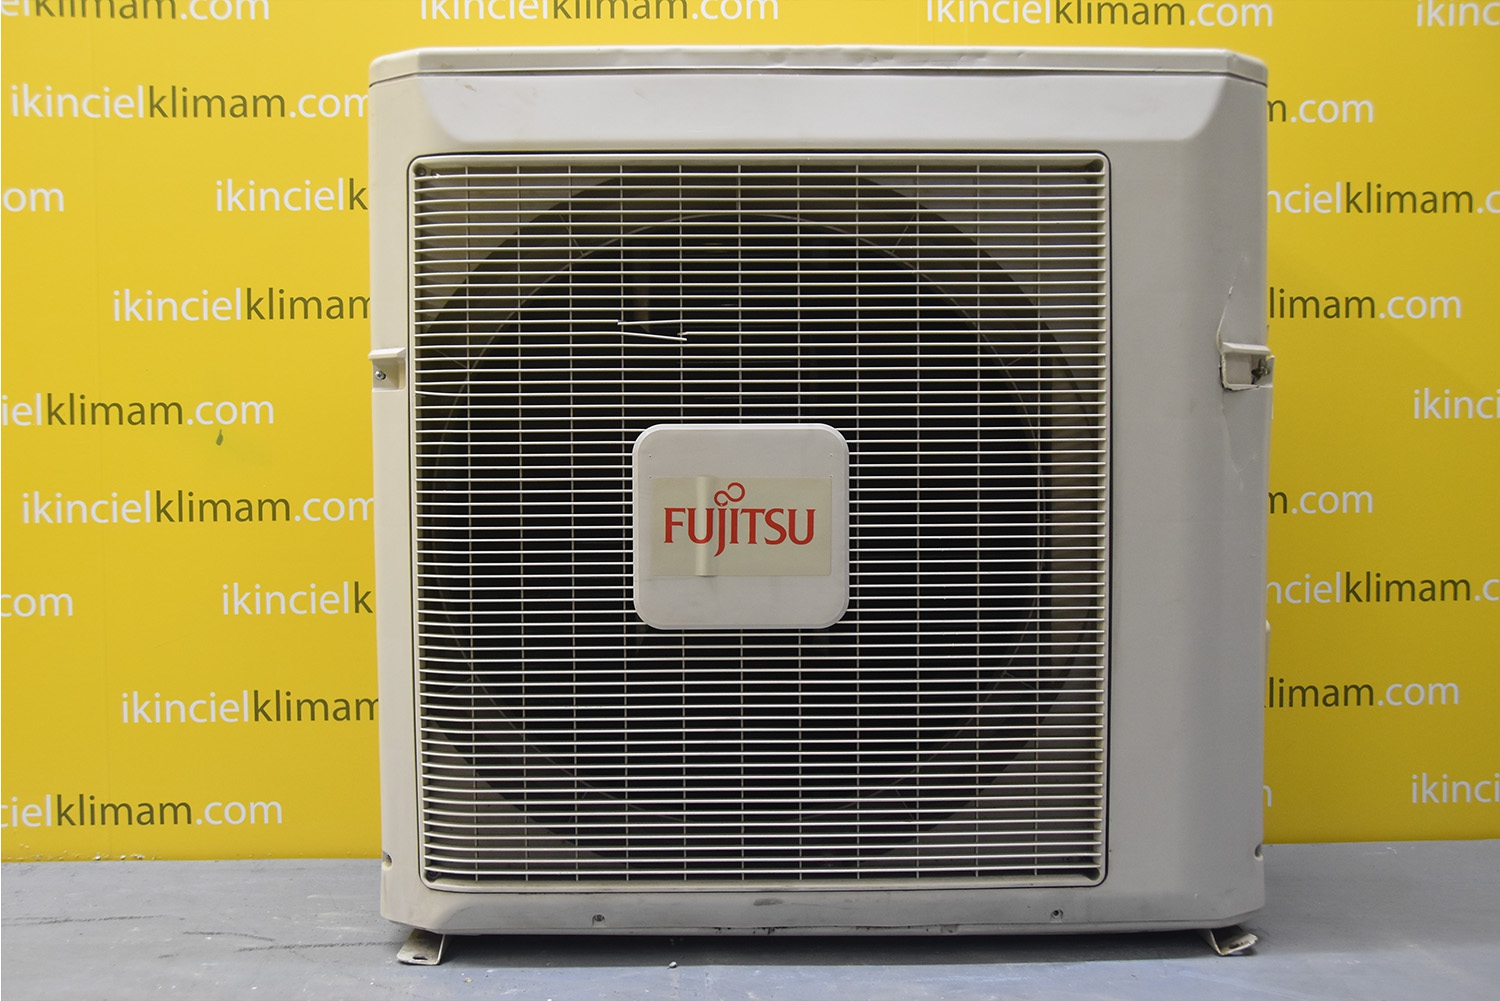 ikincielklimam.com | Fujitsu 9000 Duvar Tipi Klima Ä°nverter 9000